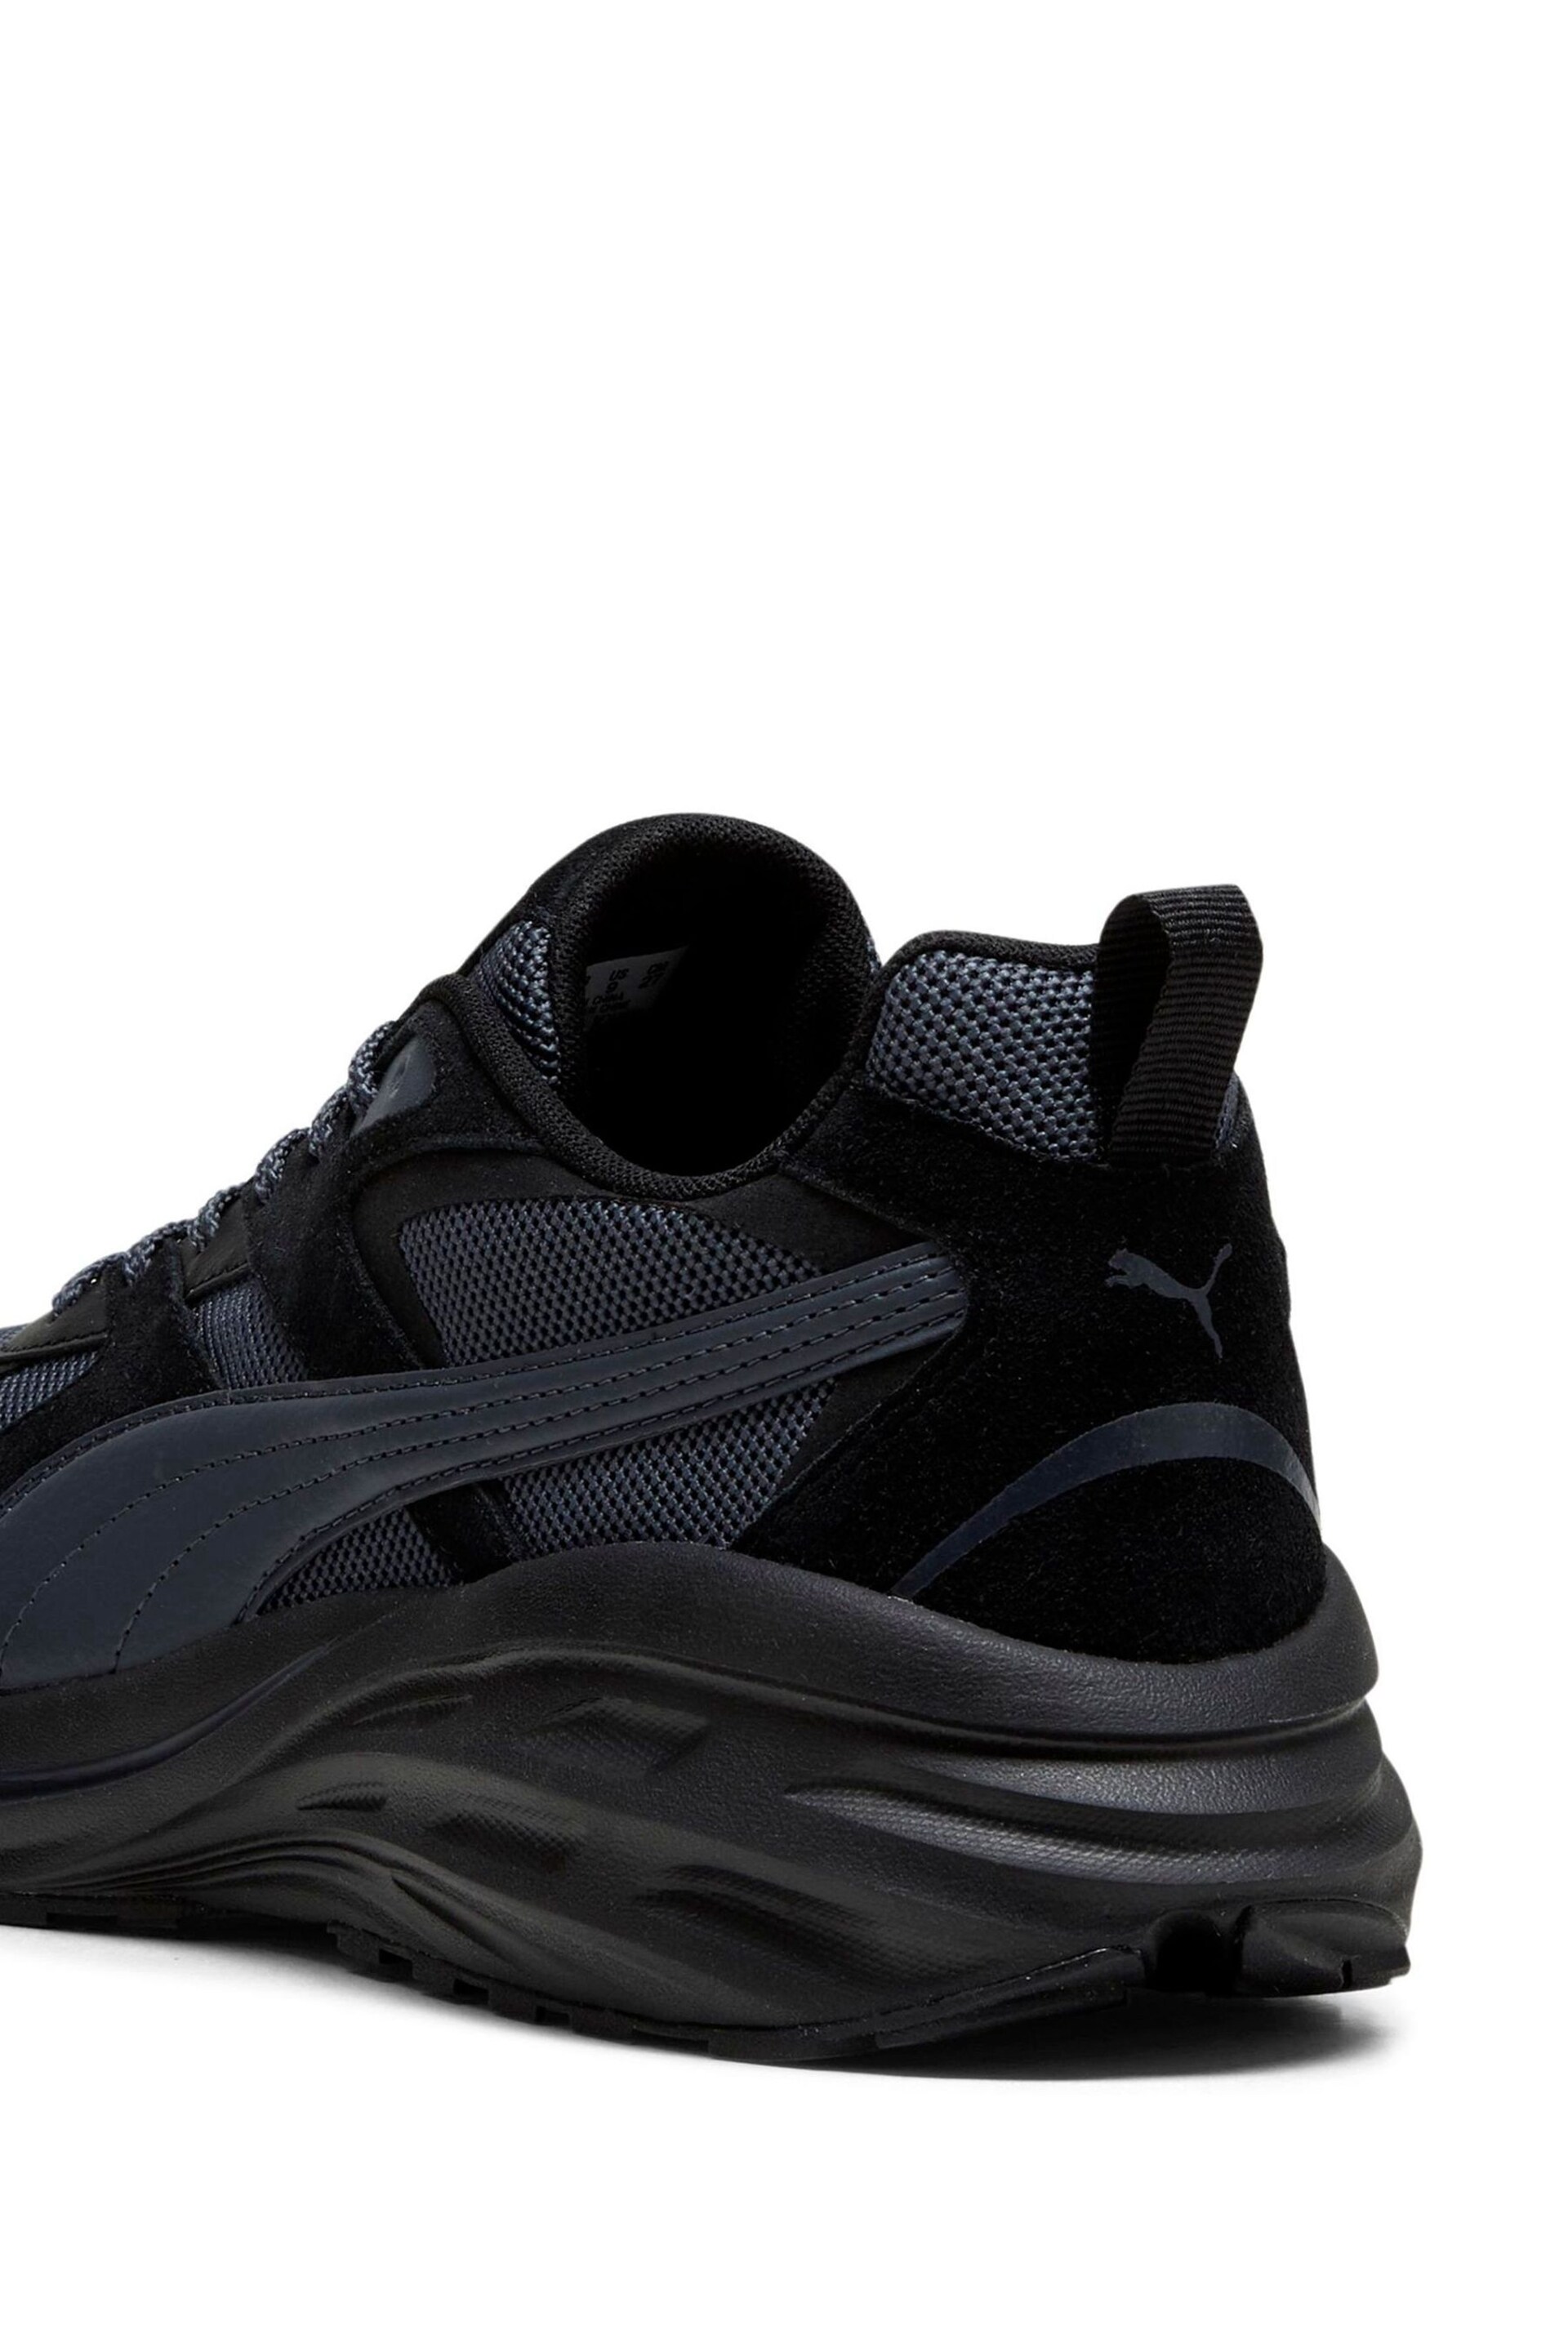 Puma Black Mens Hypnotic LS Sneakers - Image 4 of 6